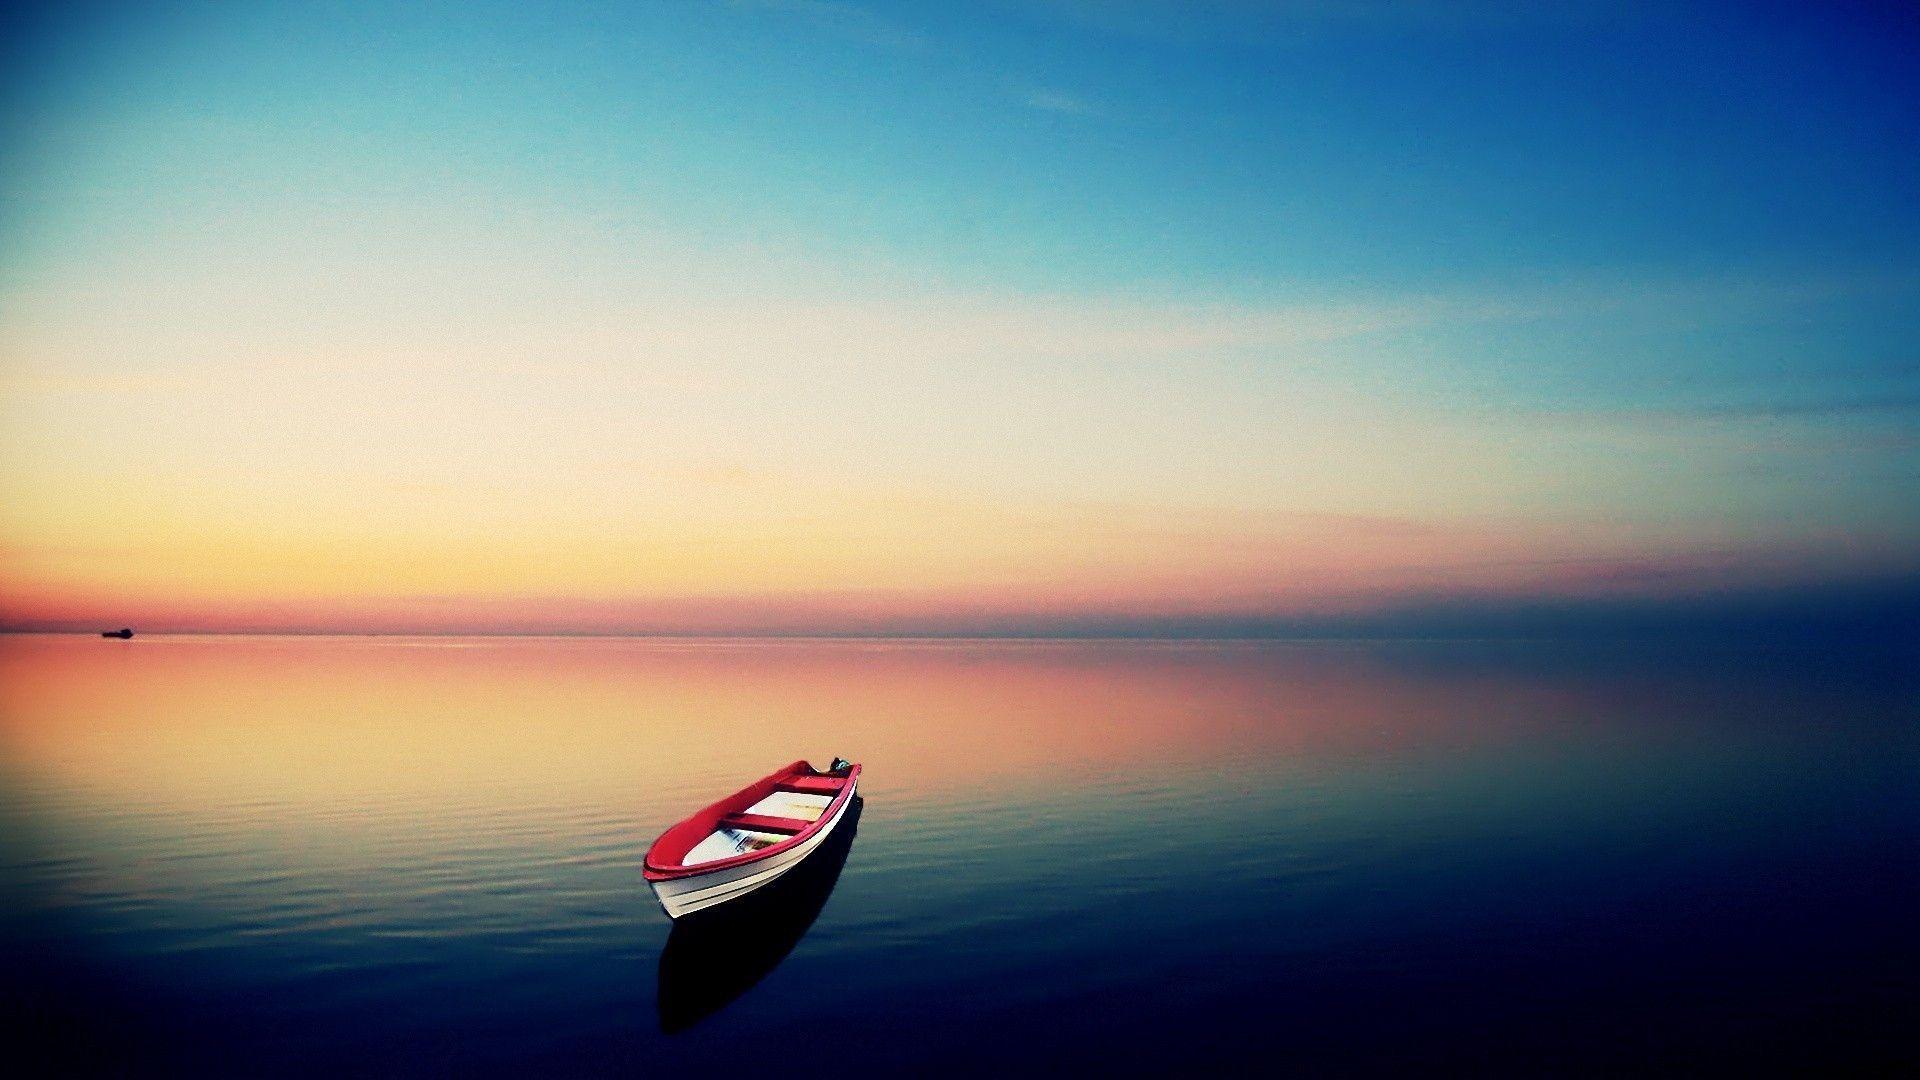 Boat Alone Wallpaper